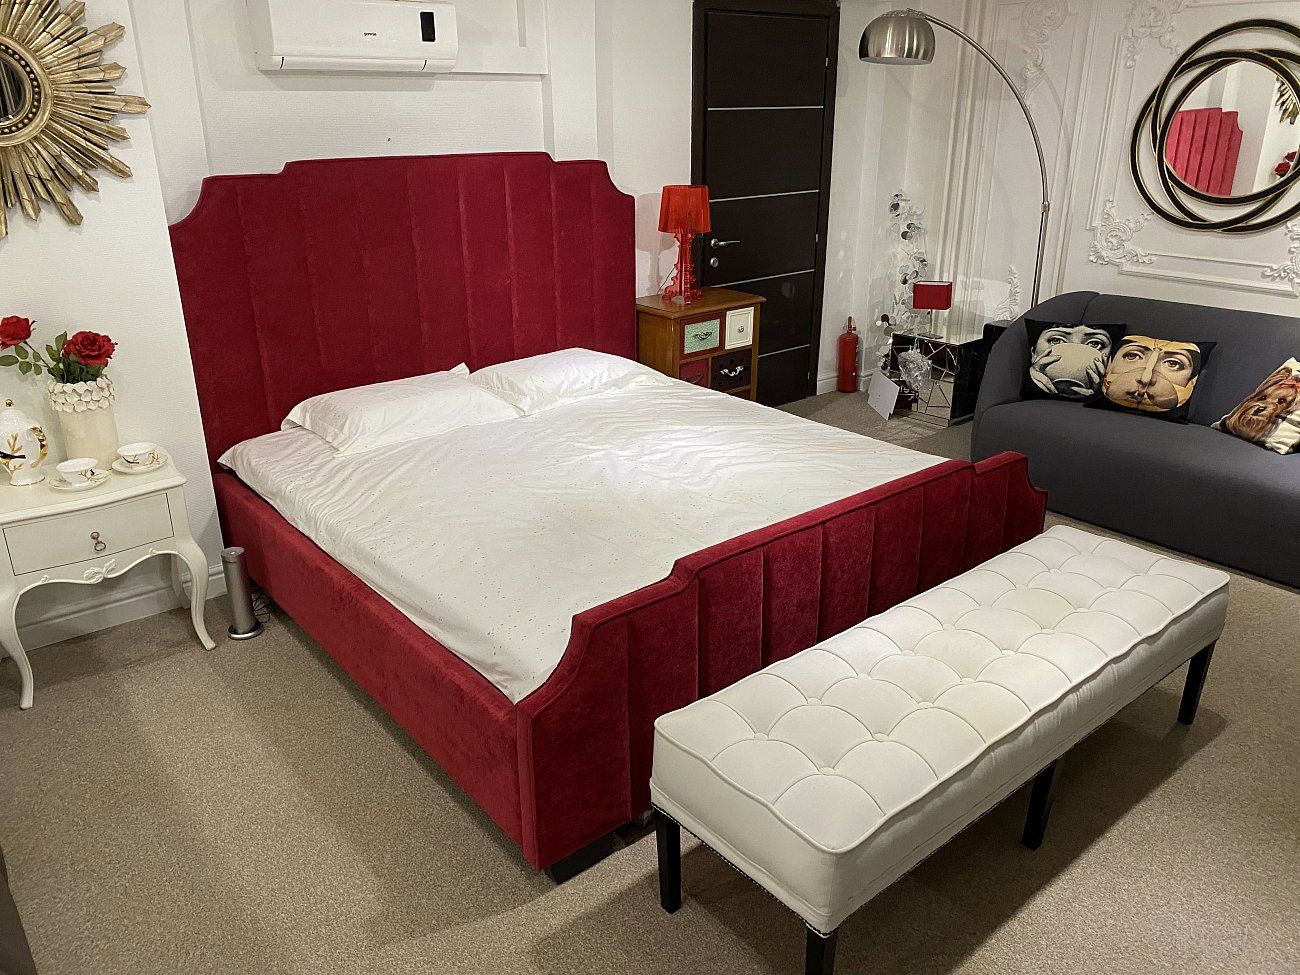 Double bed 160x200 cm bright pink Bony